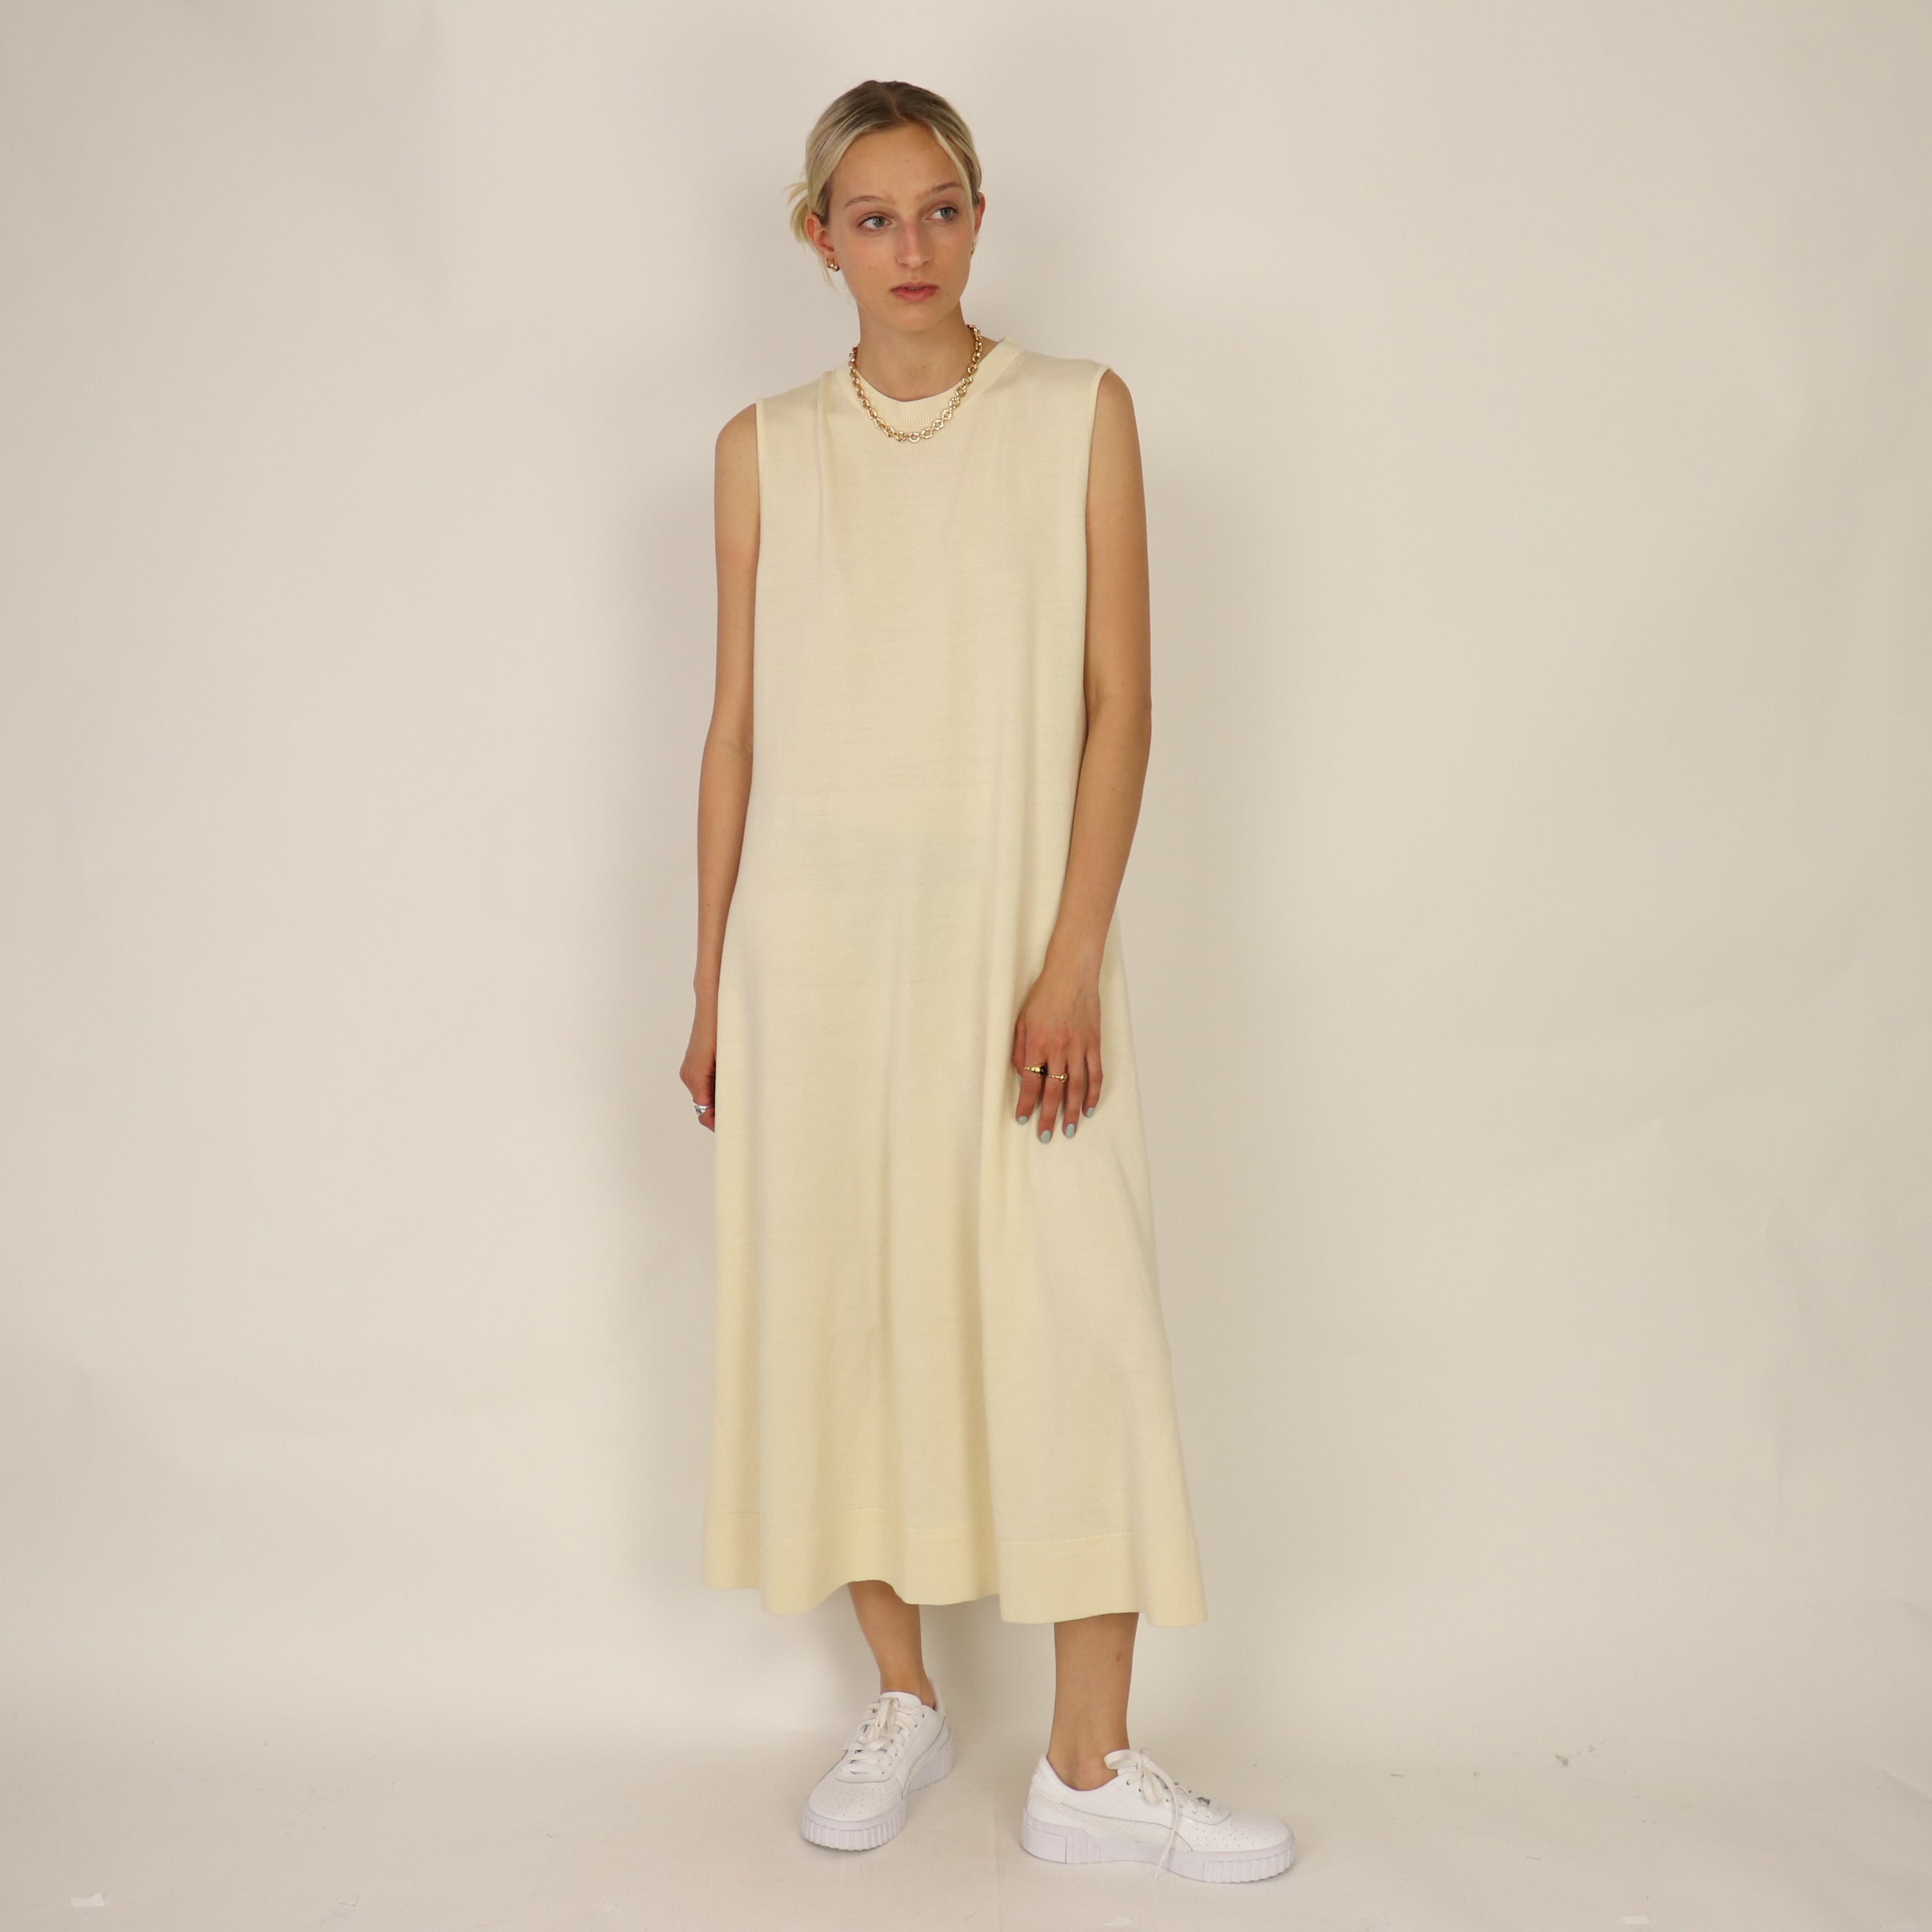 Dress, Size 12